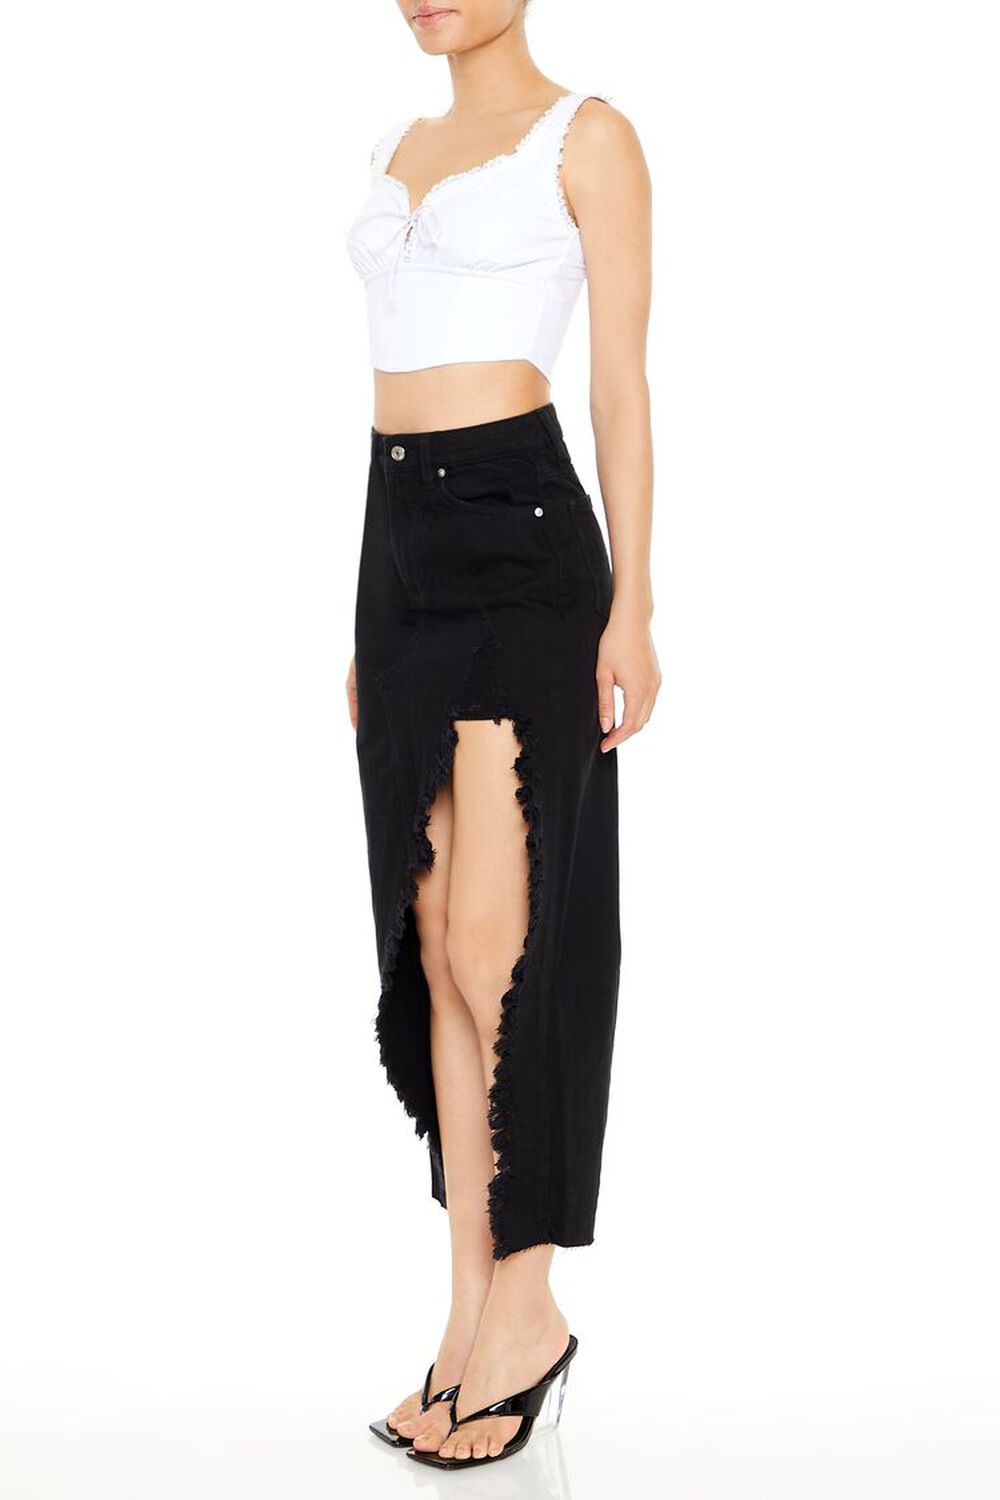 BLACK Frayed Denim Midi Skirt, image 2